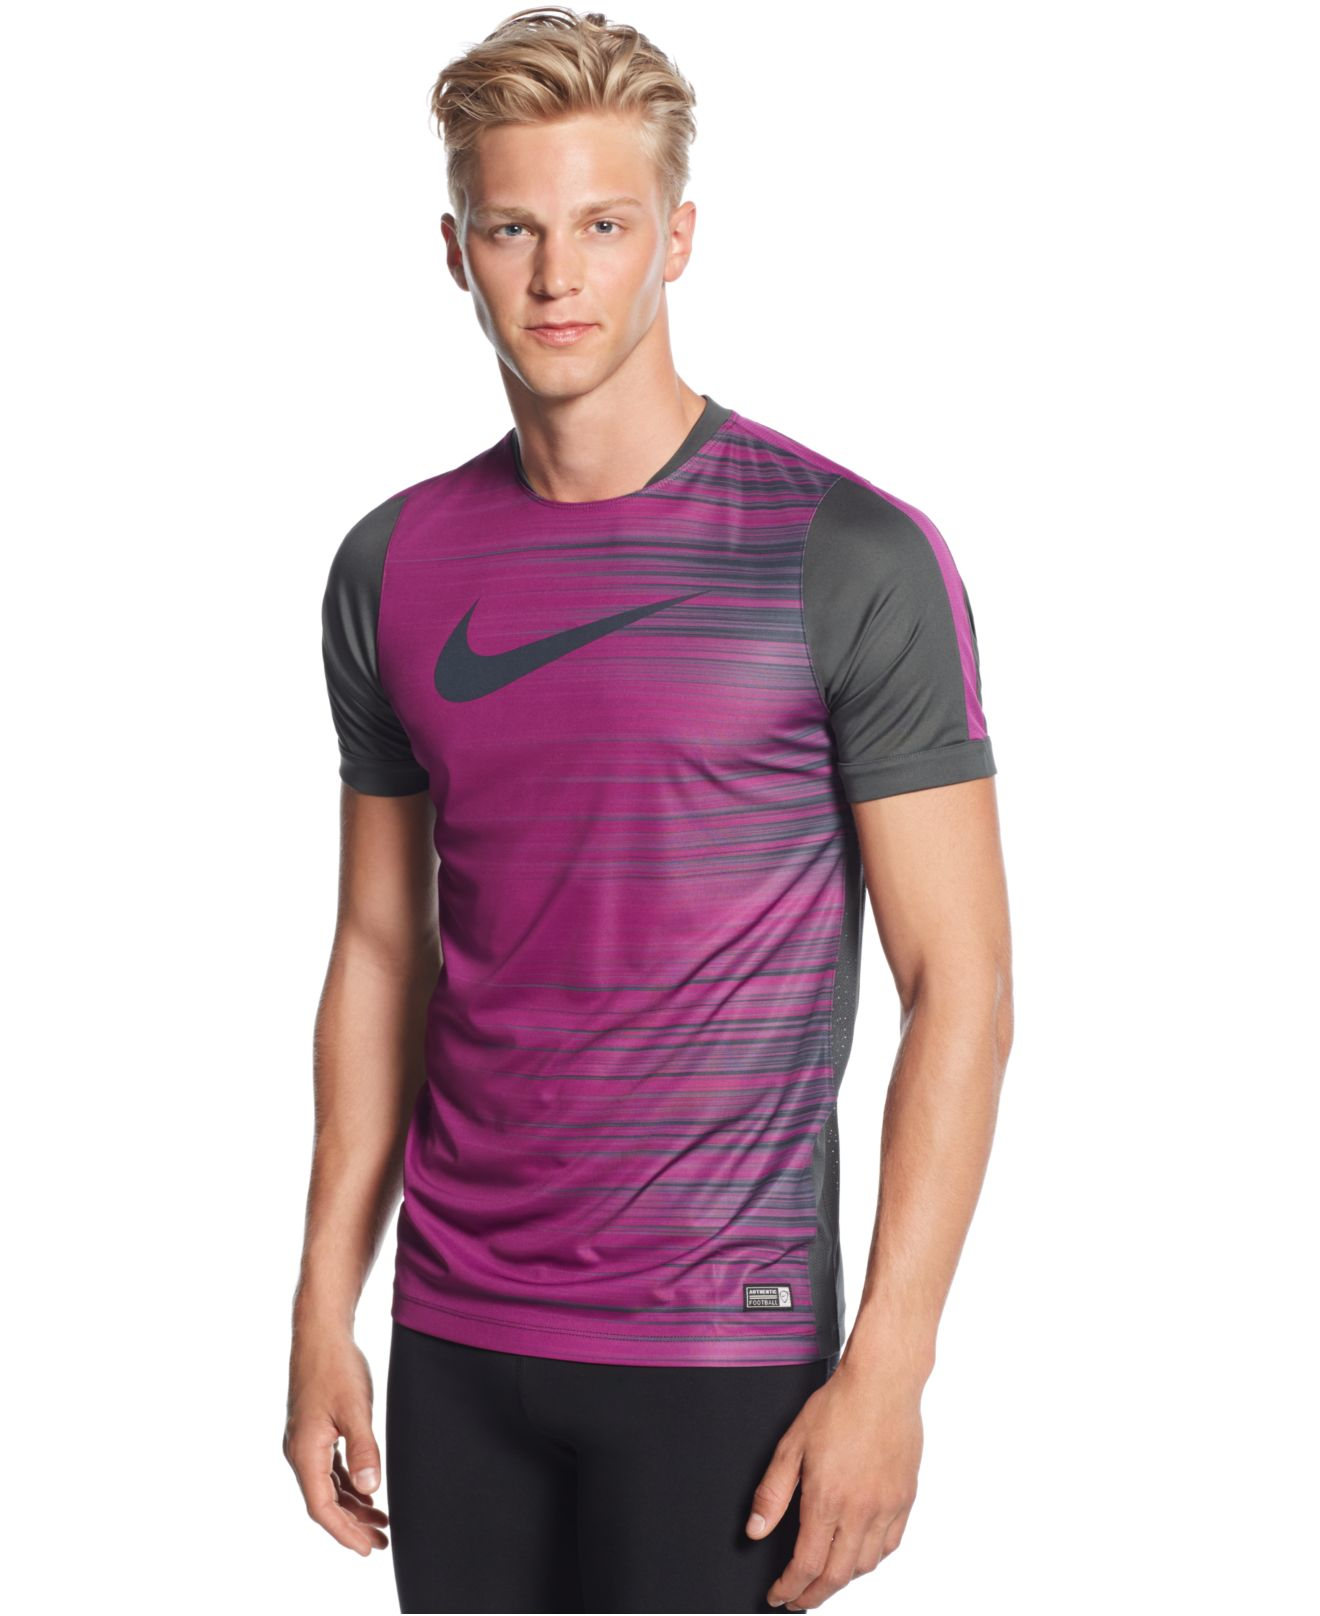 Lyst - Nike Dri-fit Gpx Flash T-shirt in Gray for Men